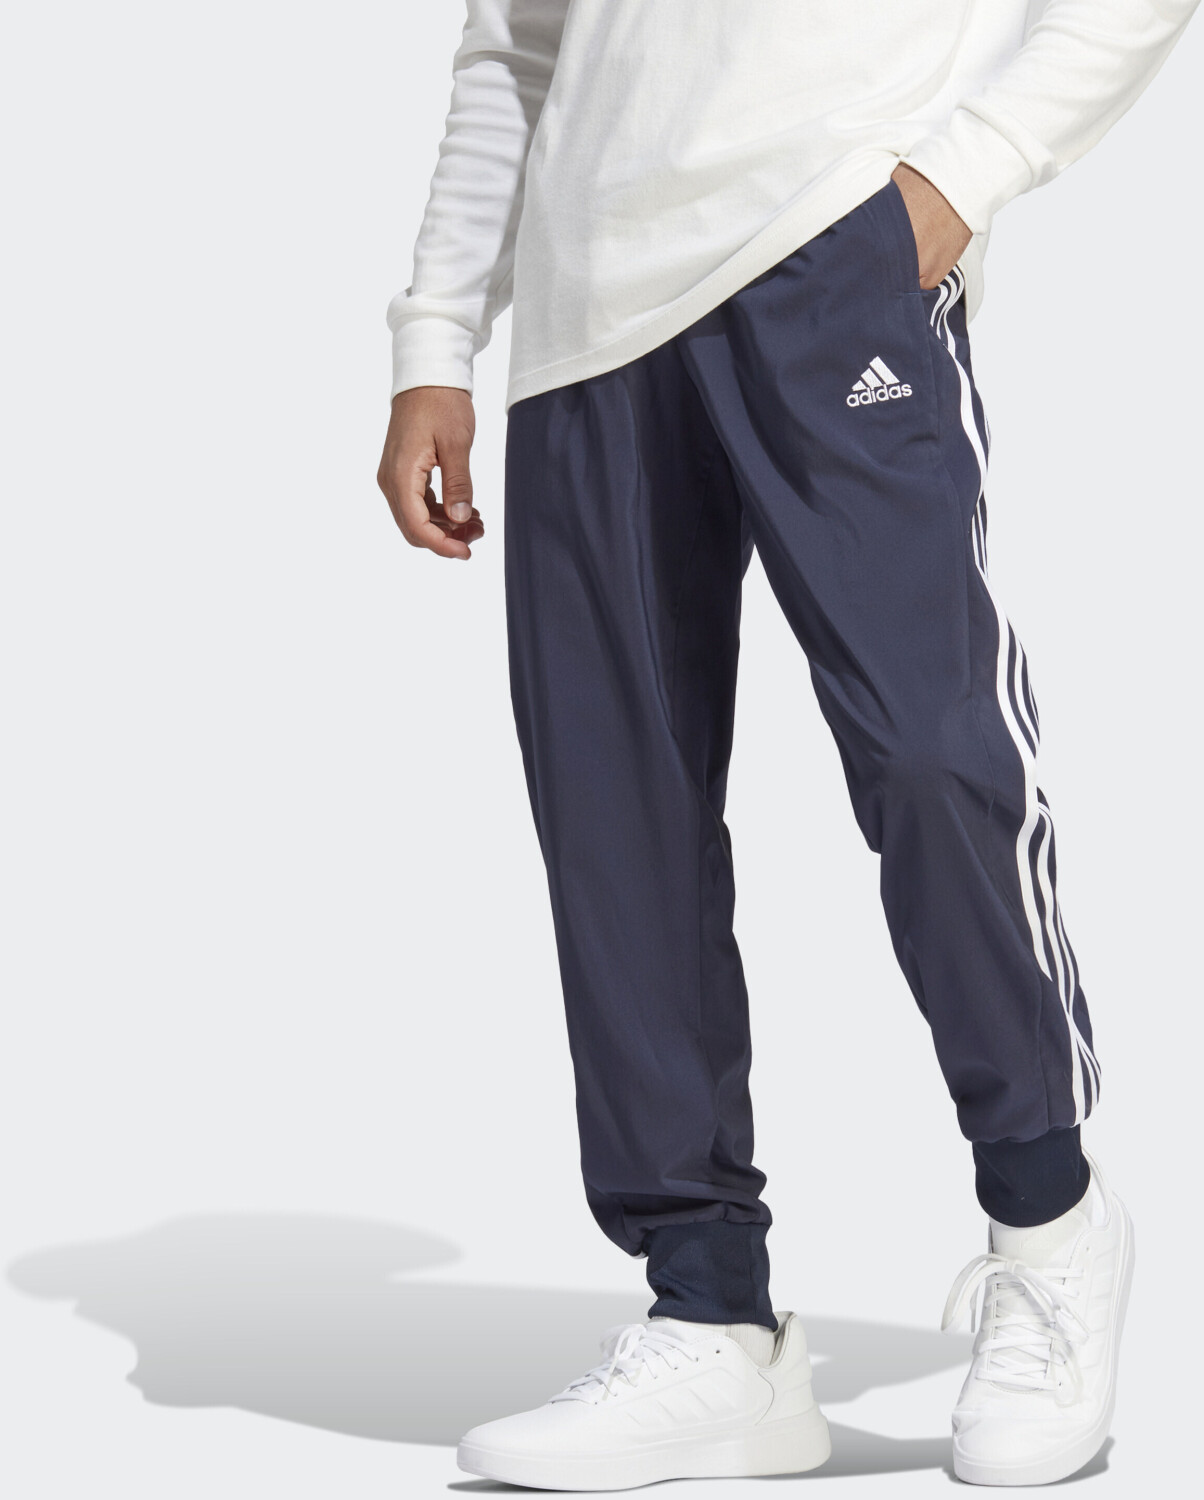 AEROREADY Woven ab € Adidas 34,75 Cuff | (IC0042) Preisvergleich Man legend Essentials Tapered bei Pants 3-Stripes Ink/white